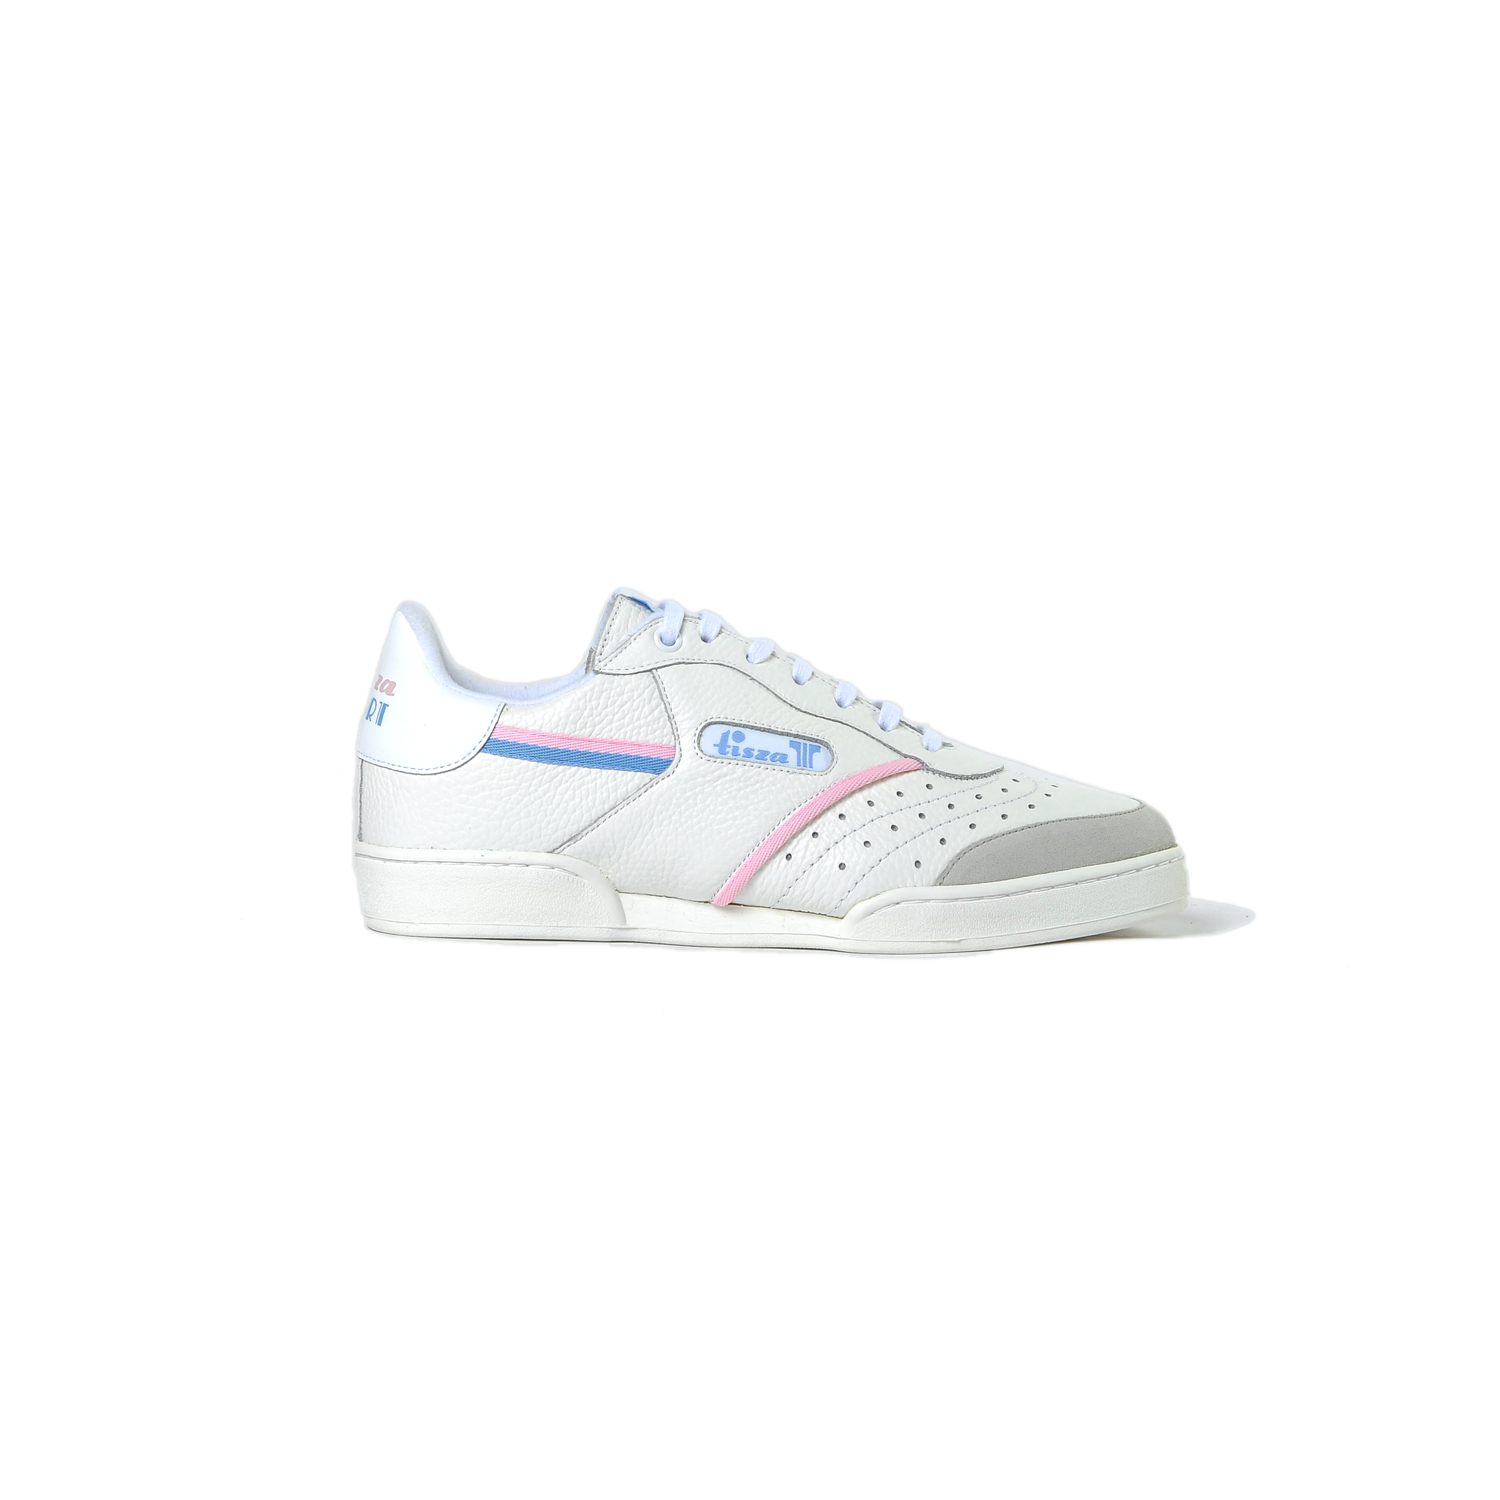 Tisza shoes - Sport - White-blue-pink